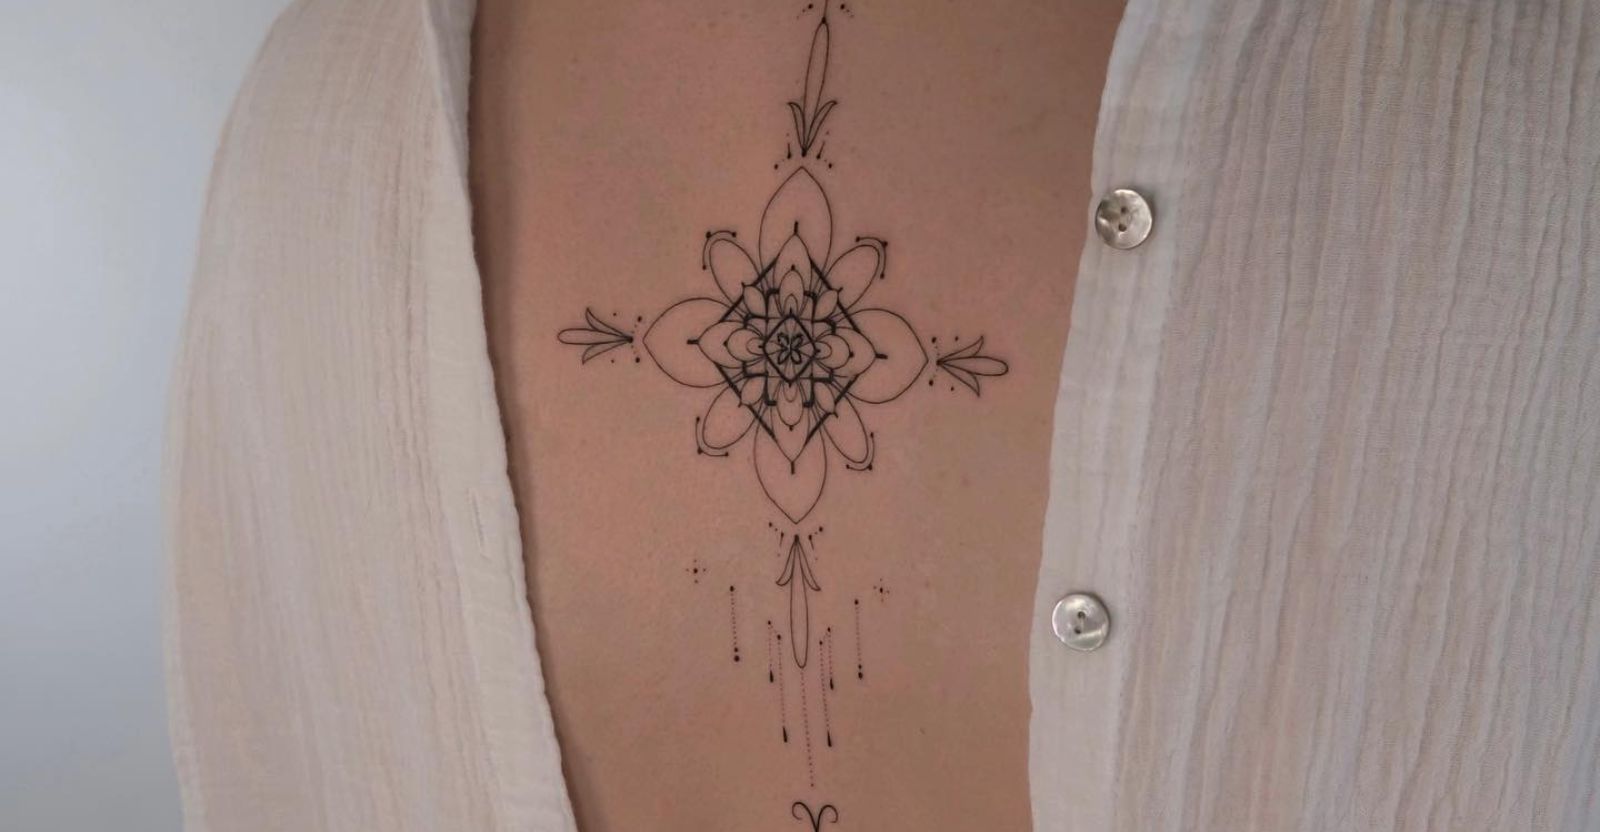 spine tattoo design for women